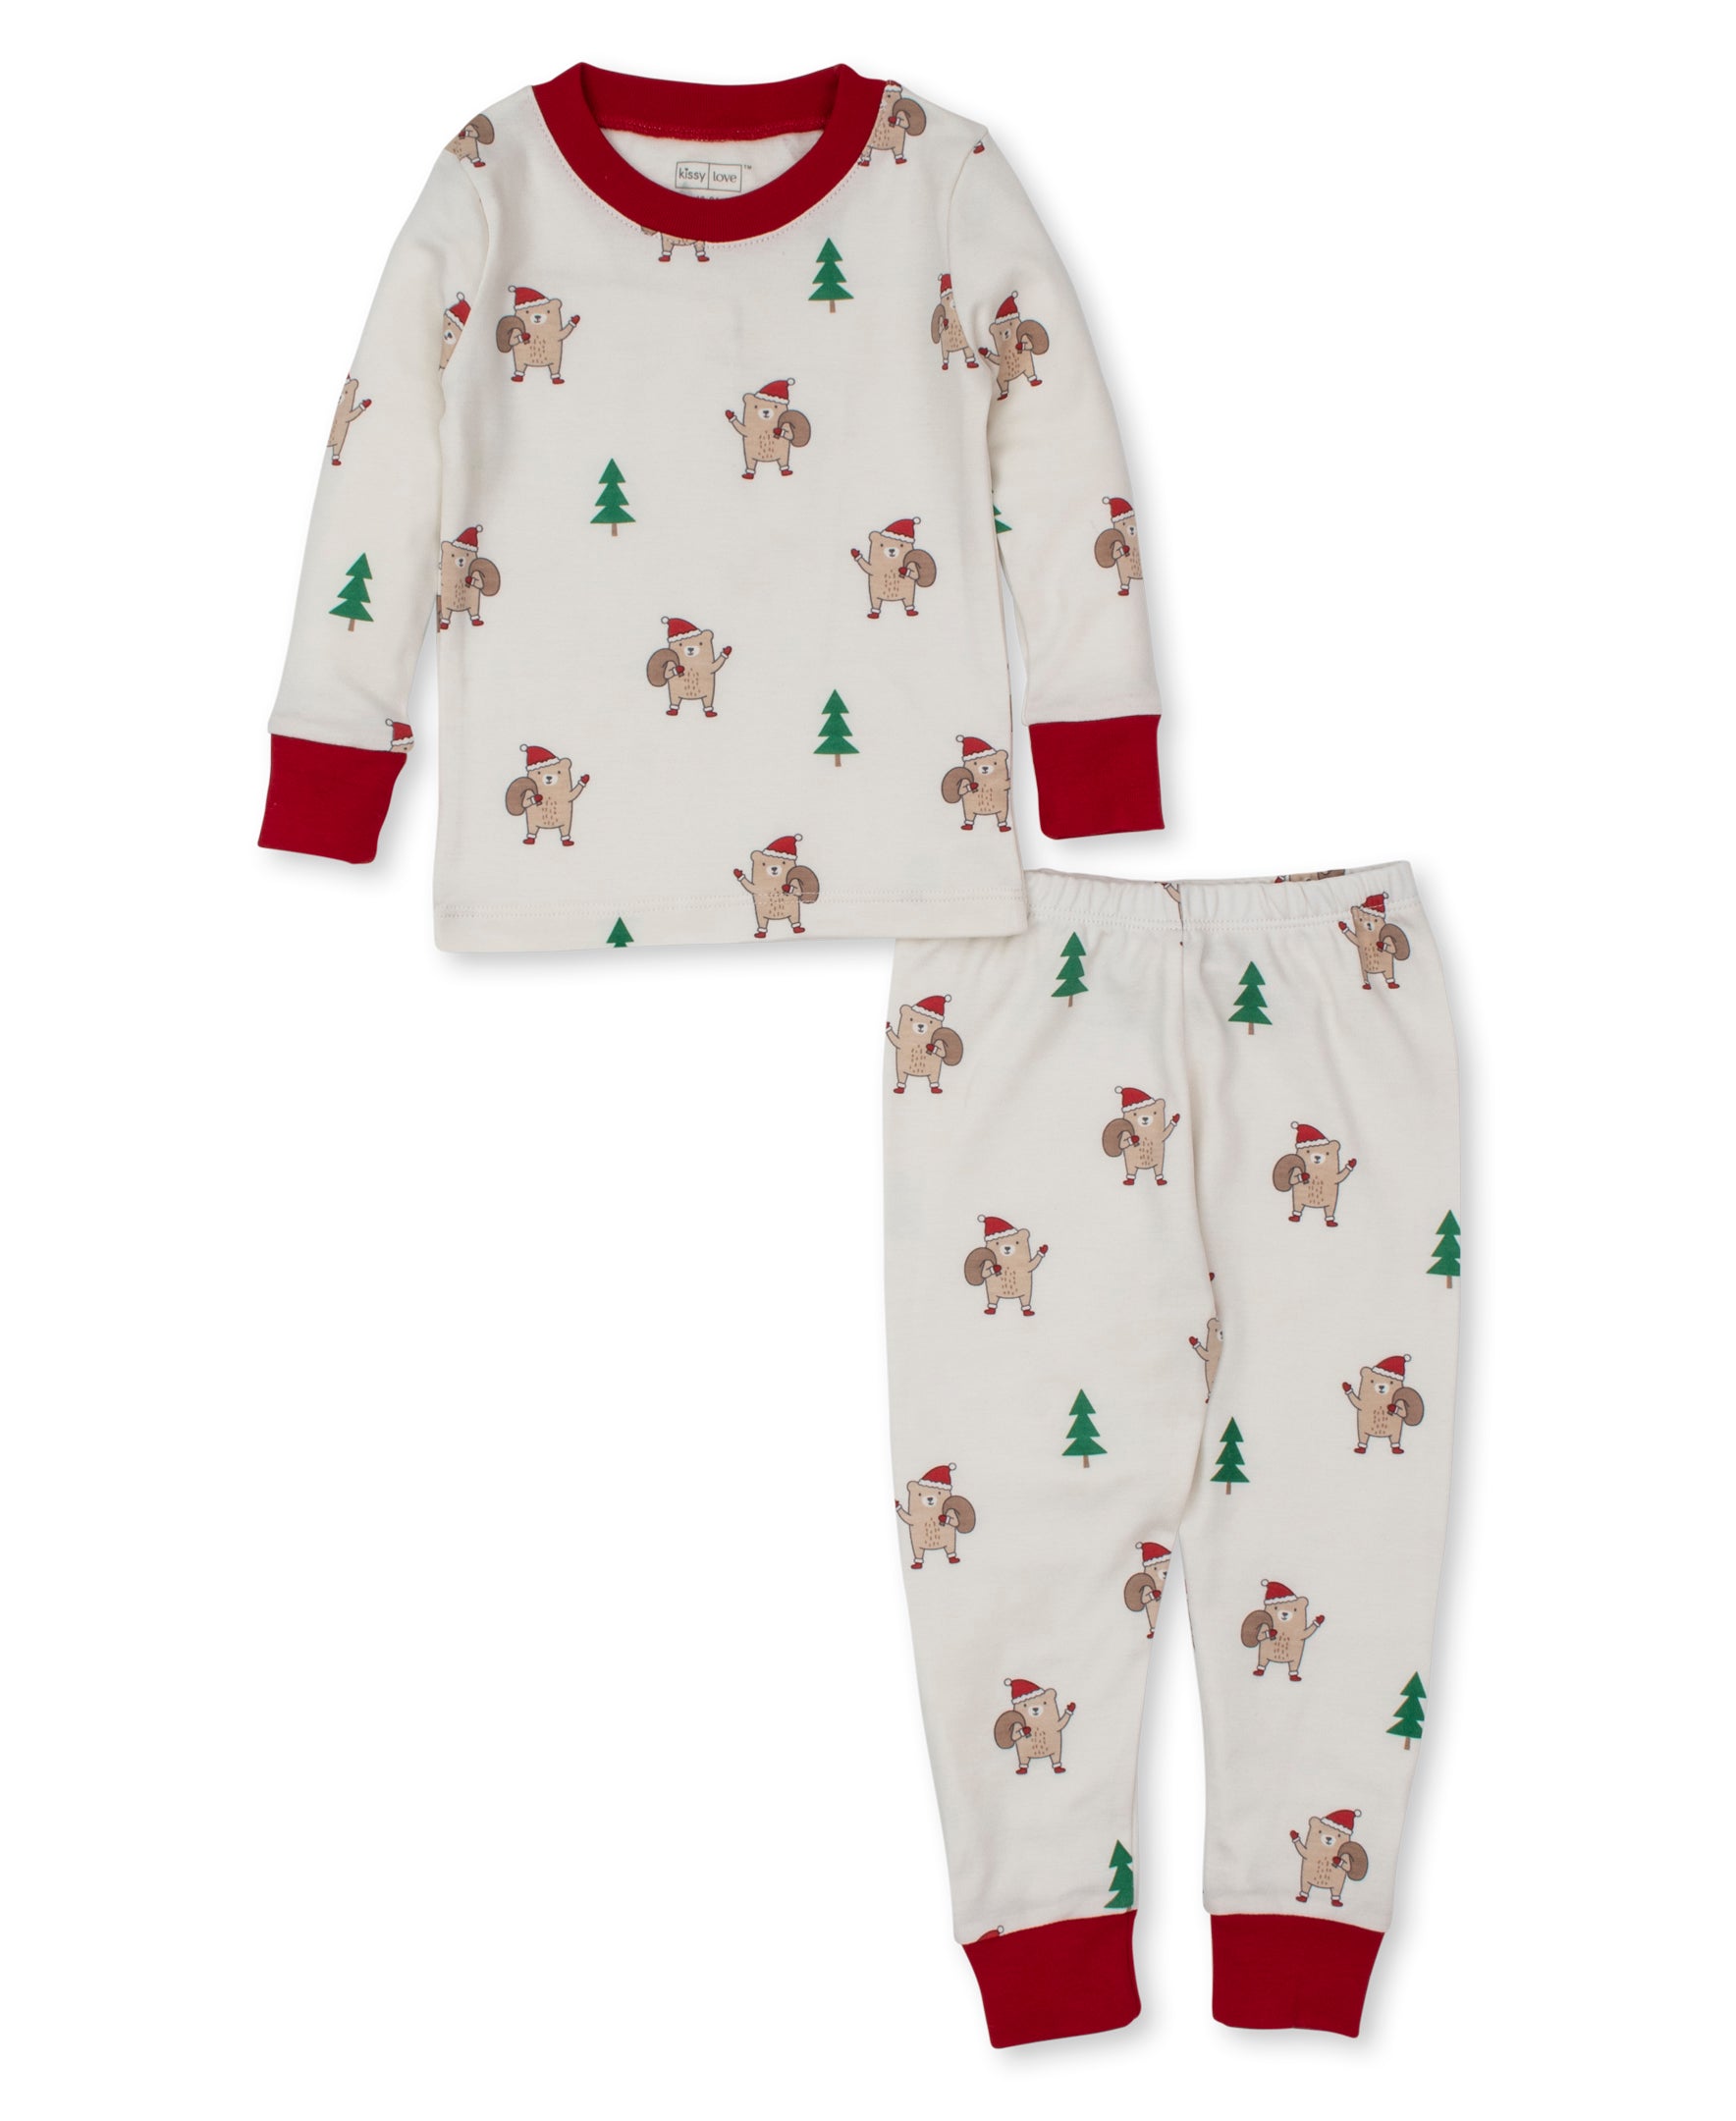 Limited Edition Prints Toddler Pajamas